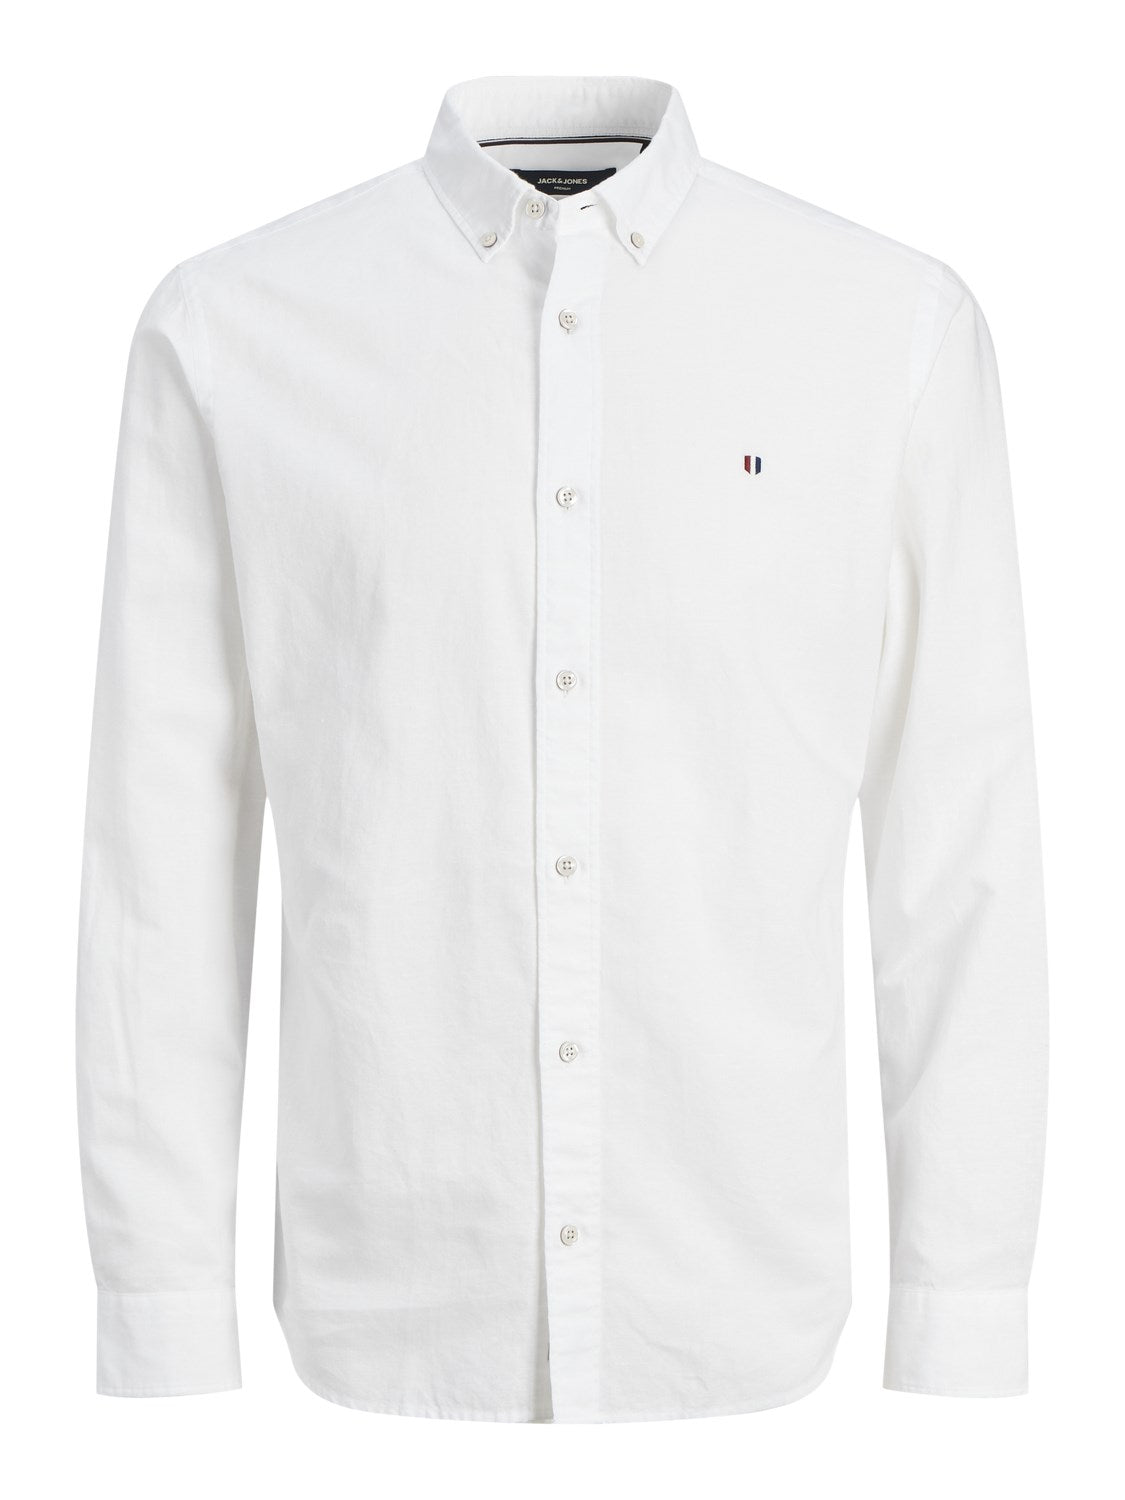 Men's Summer Shield Shirt Long Sleeve-White-Front View